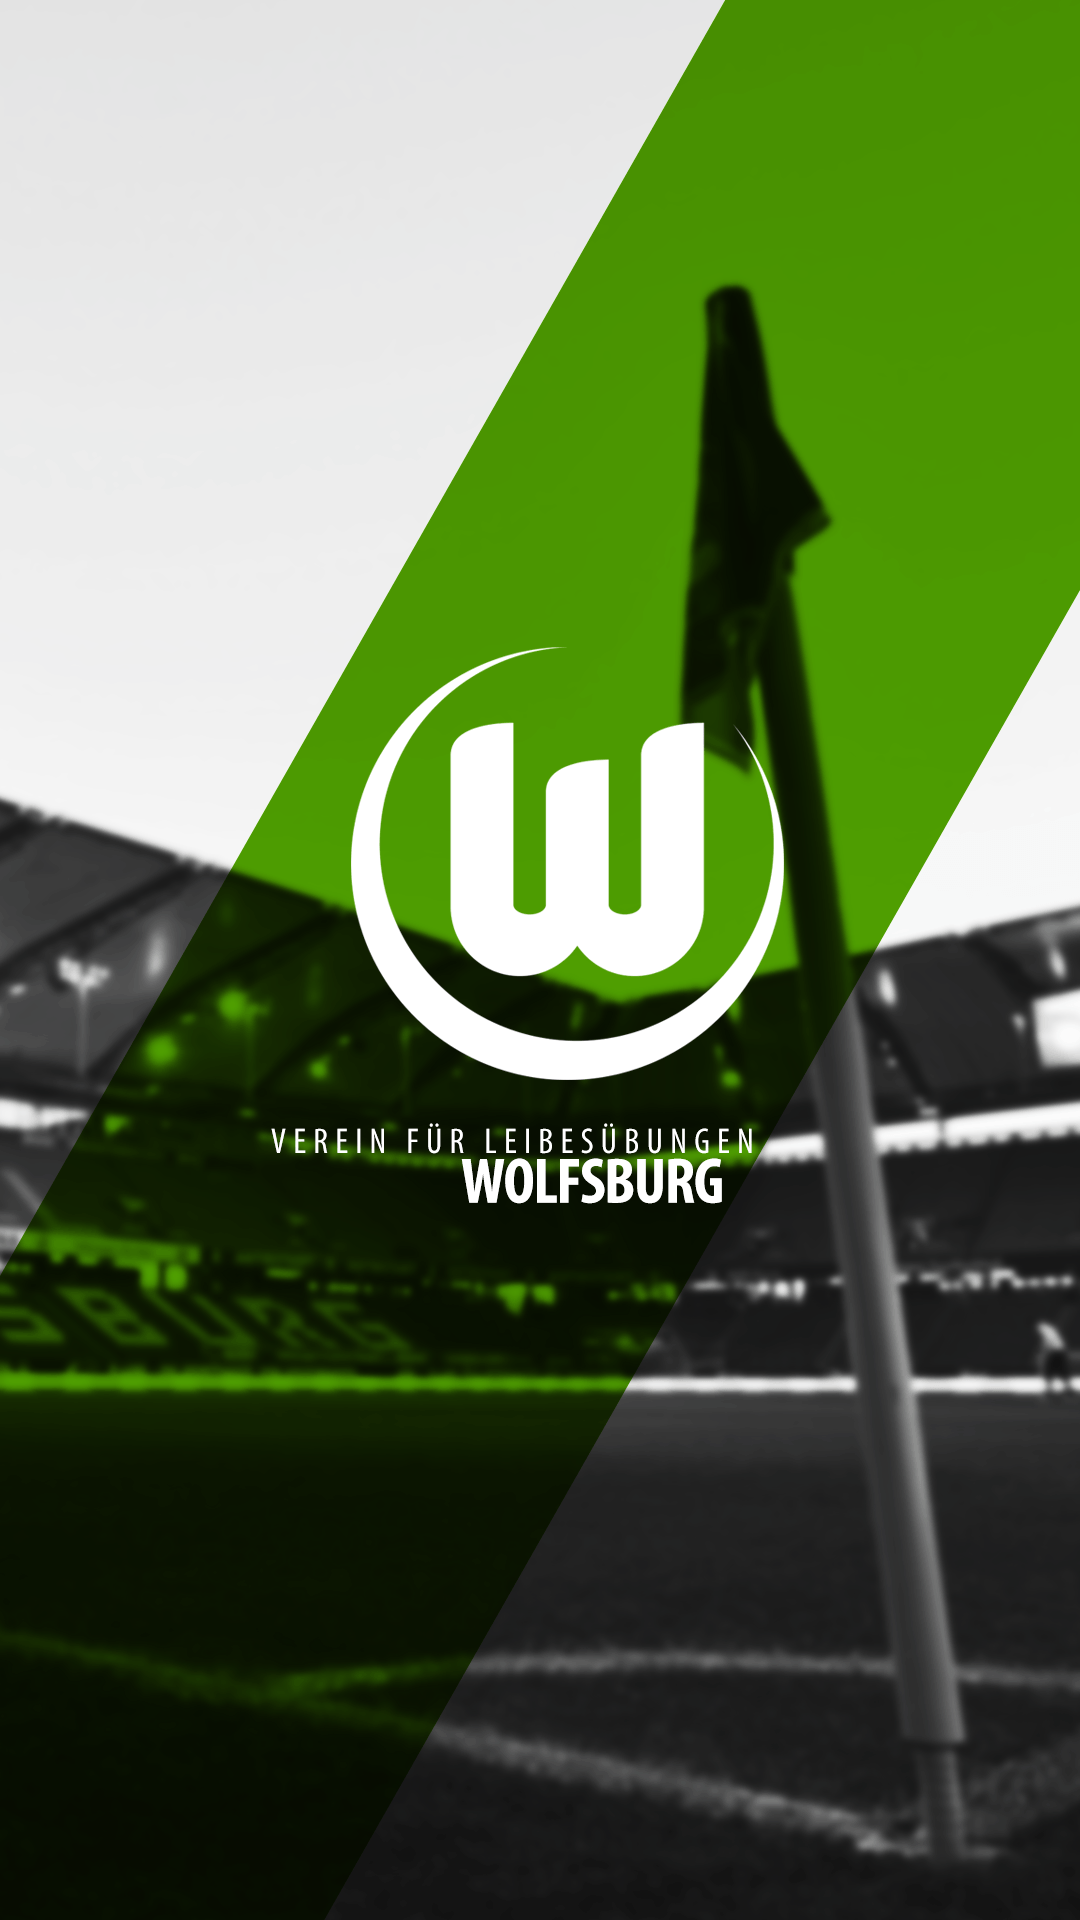 Vfl Wolfsburgo Wallpapers